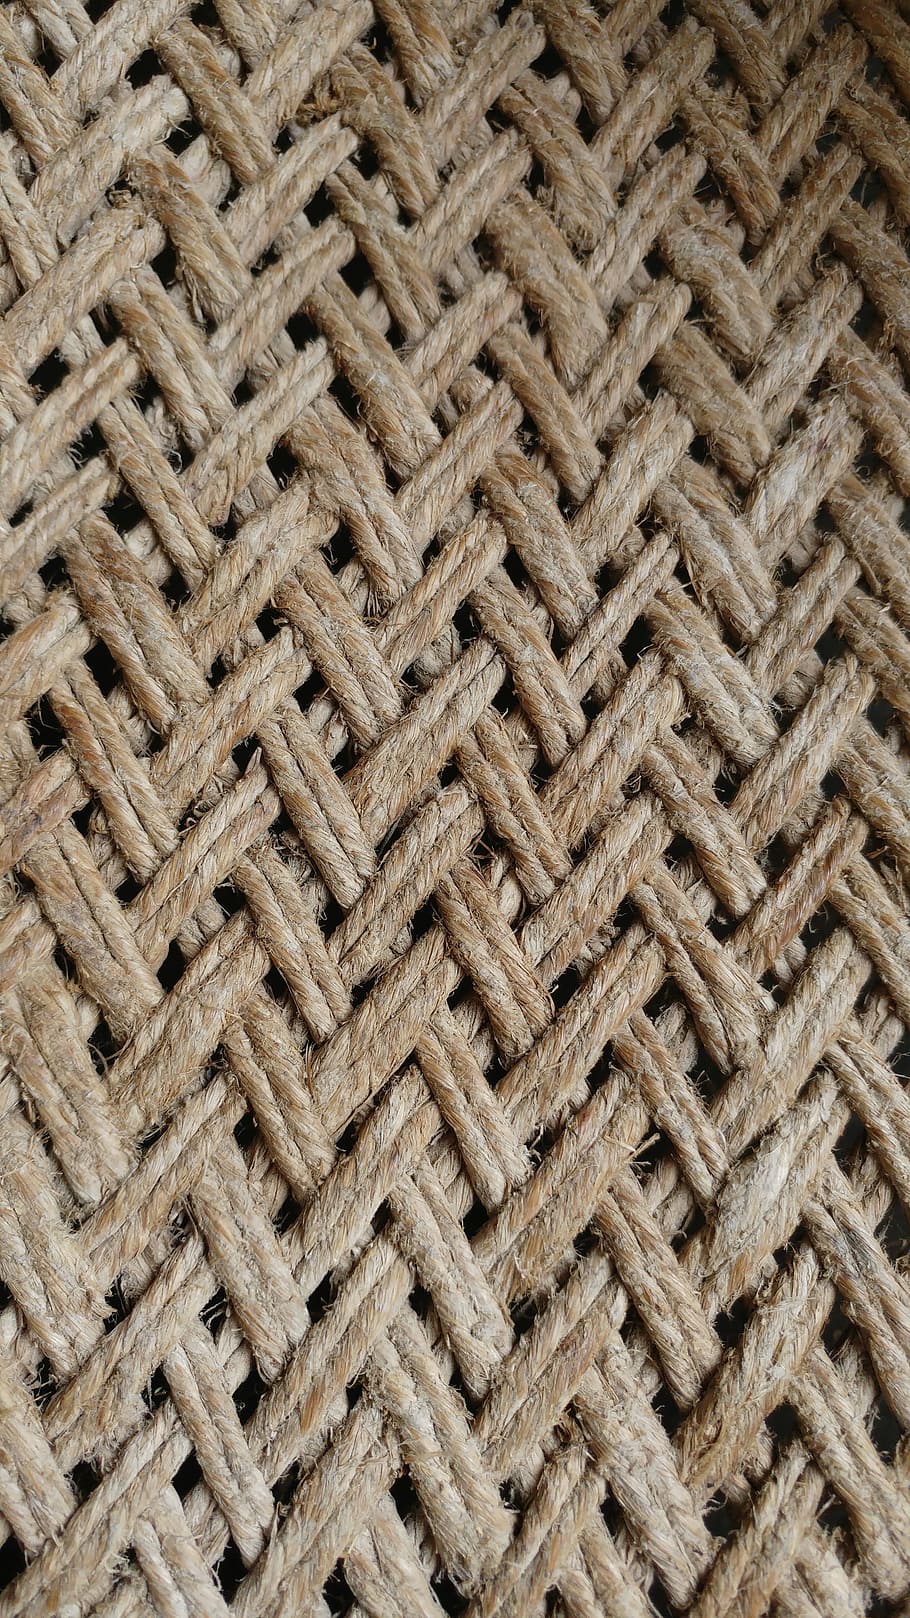 weaving, craft, pattern, wicker, net, fabric, rope, handmade, handicraft, fibre